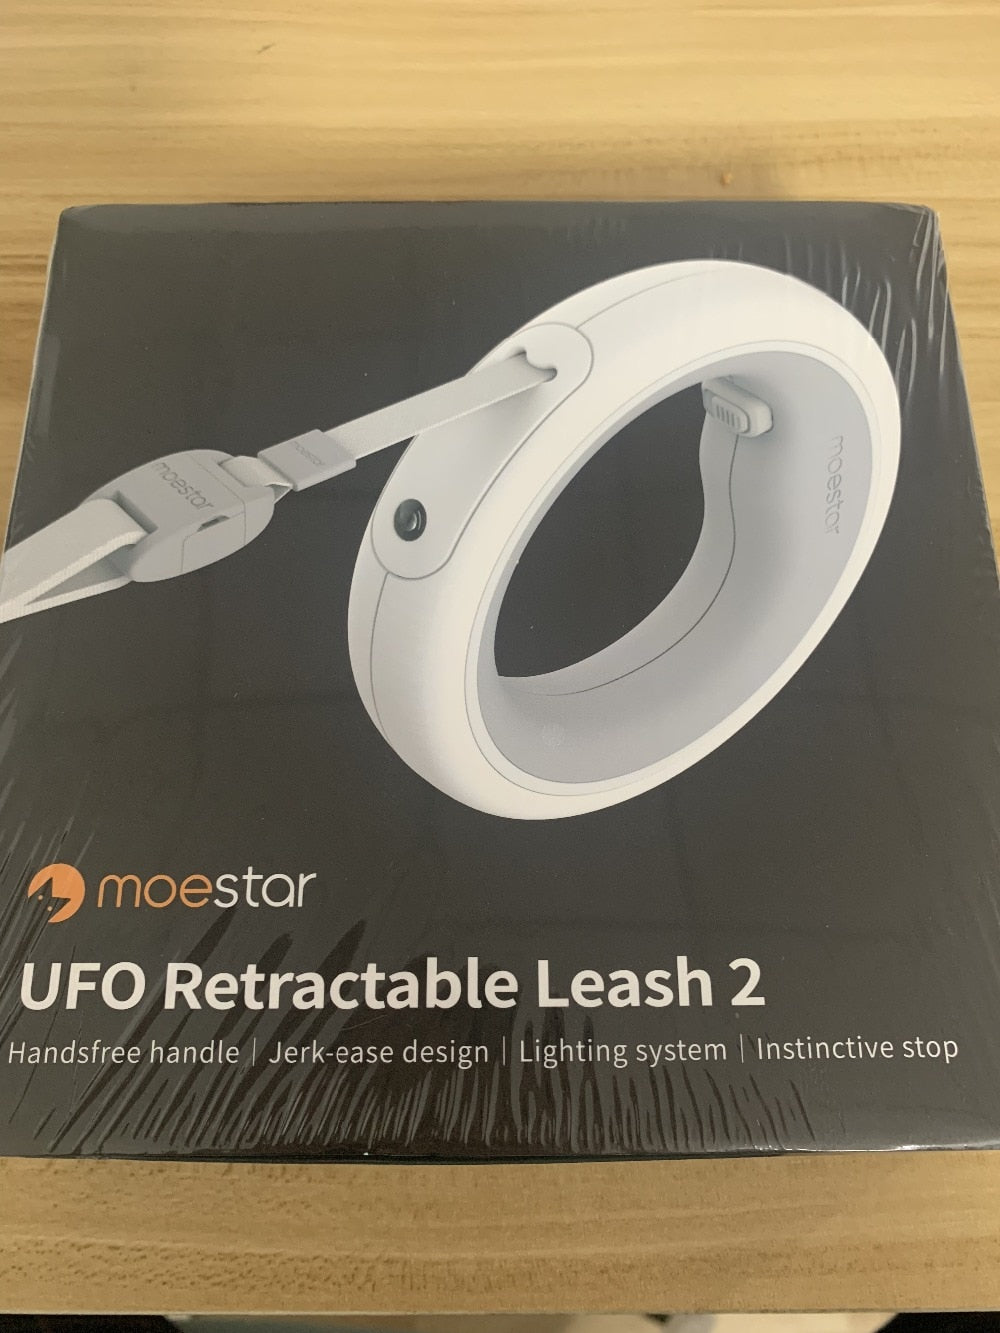 retractable flexible led night light dog leash ring